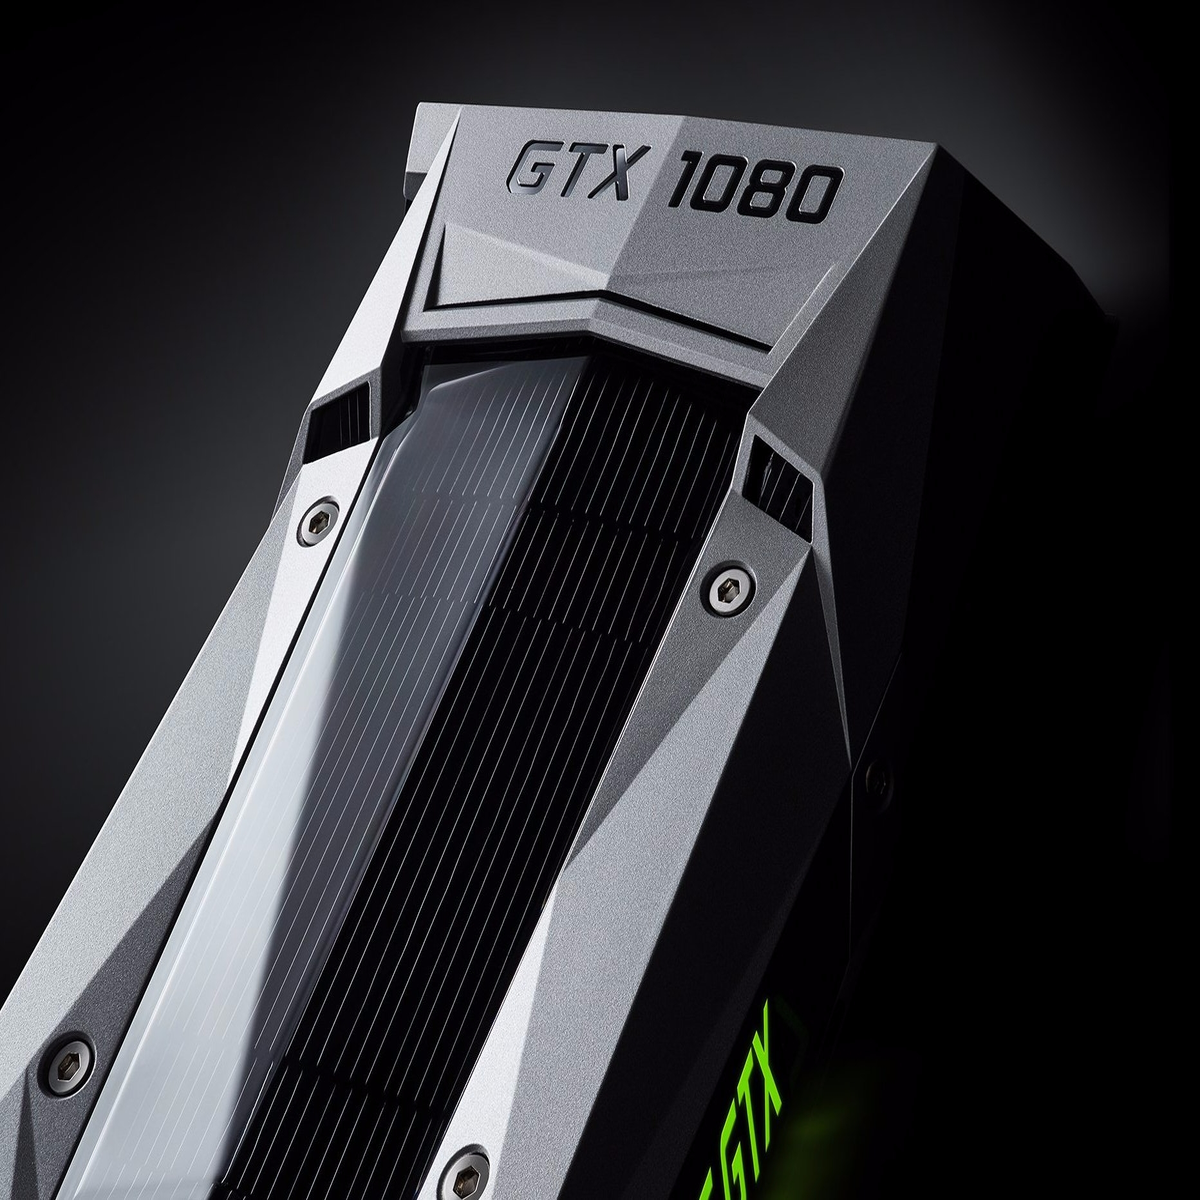 Nvidia GeForce GTX 1080 Ti Review -  Reviews